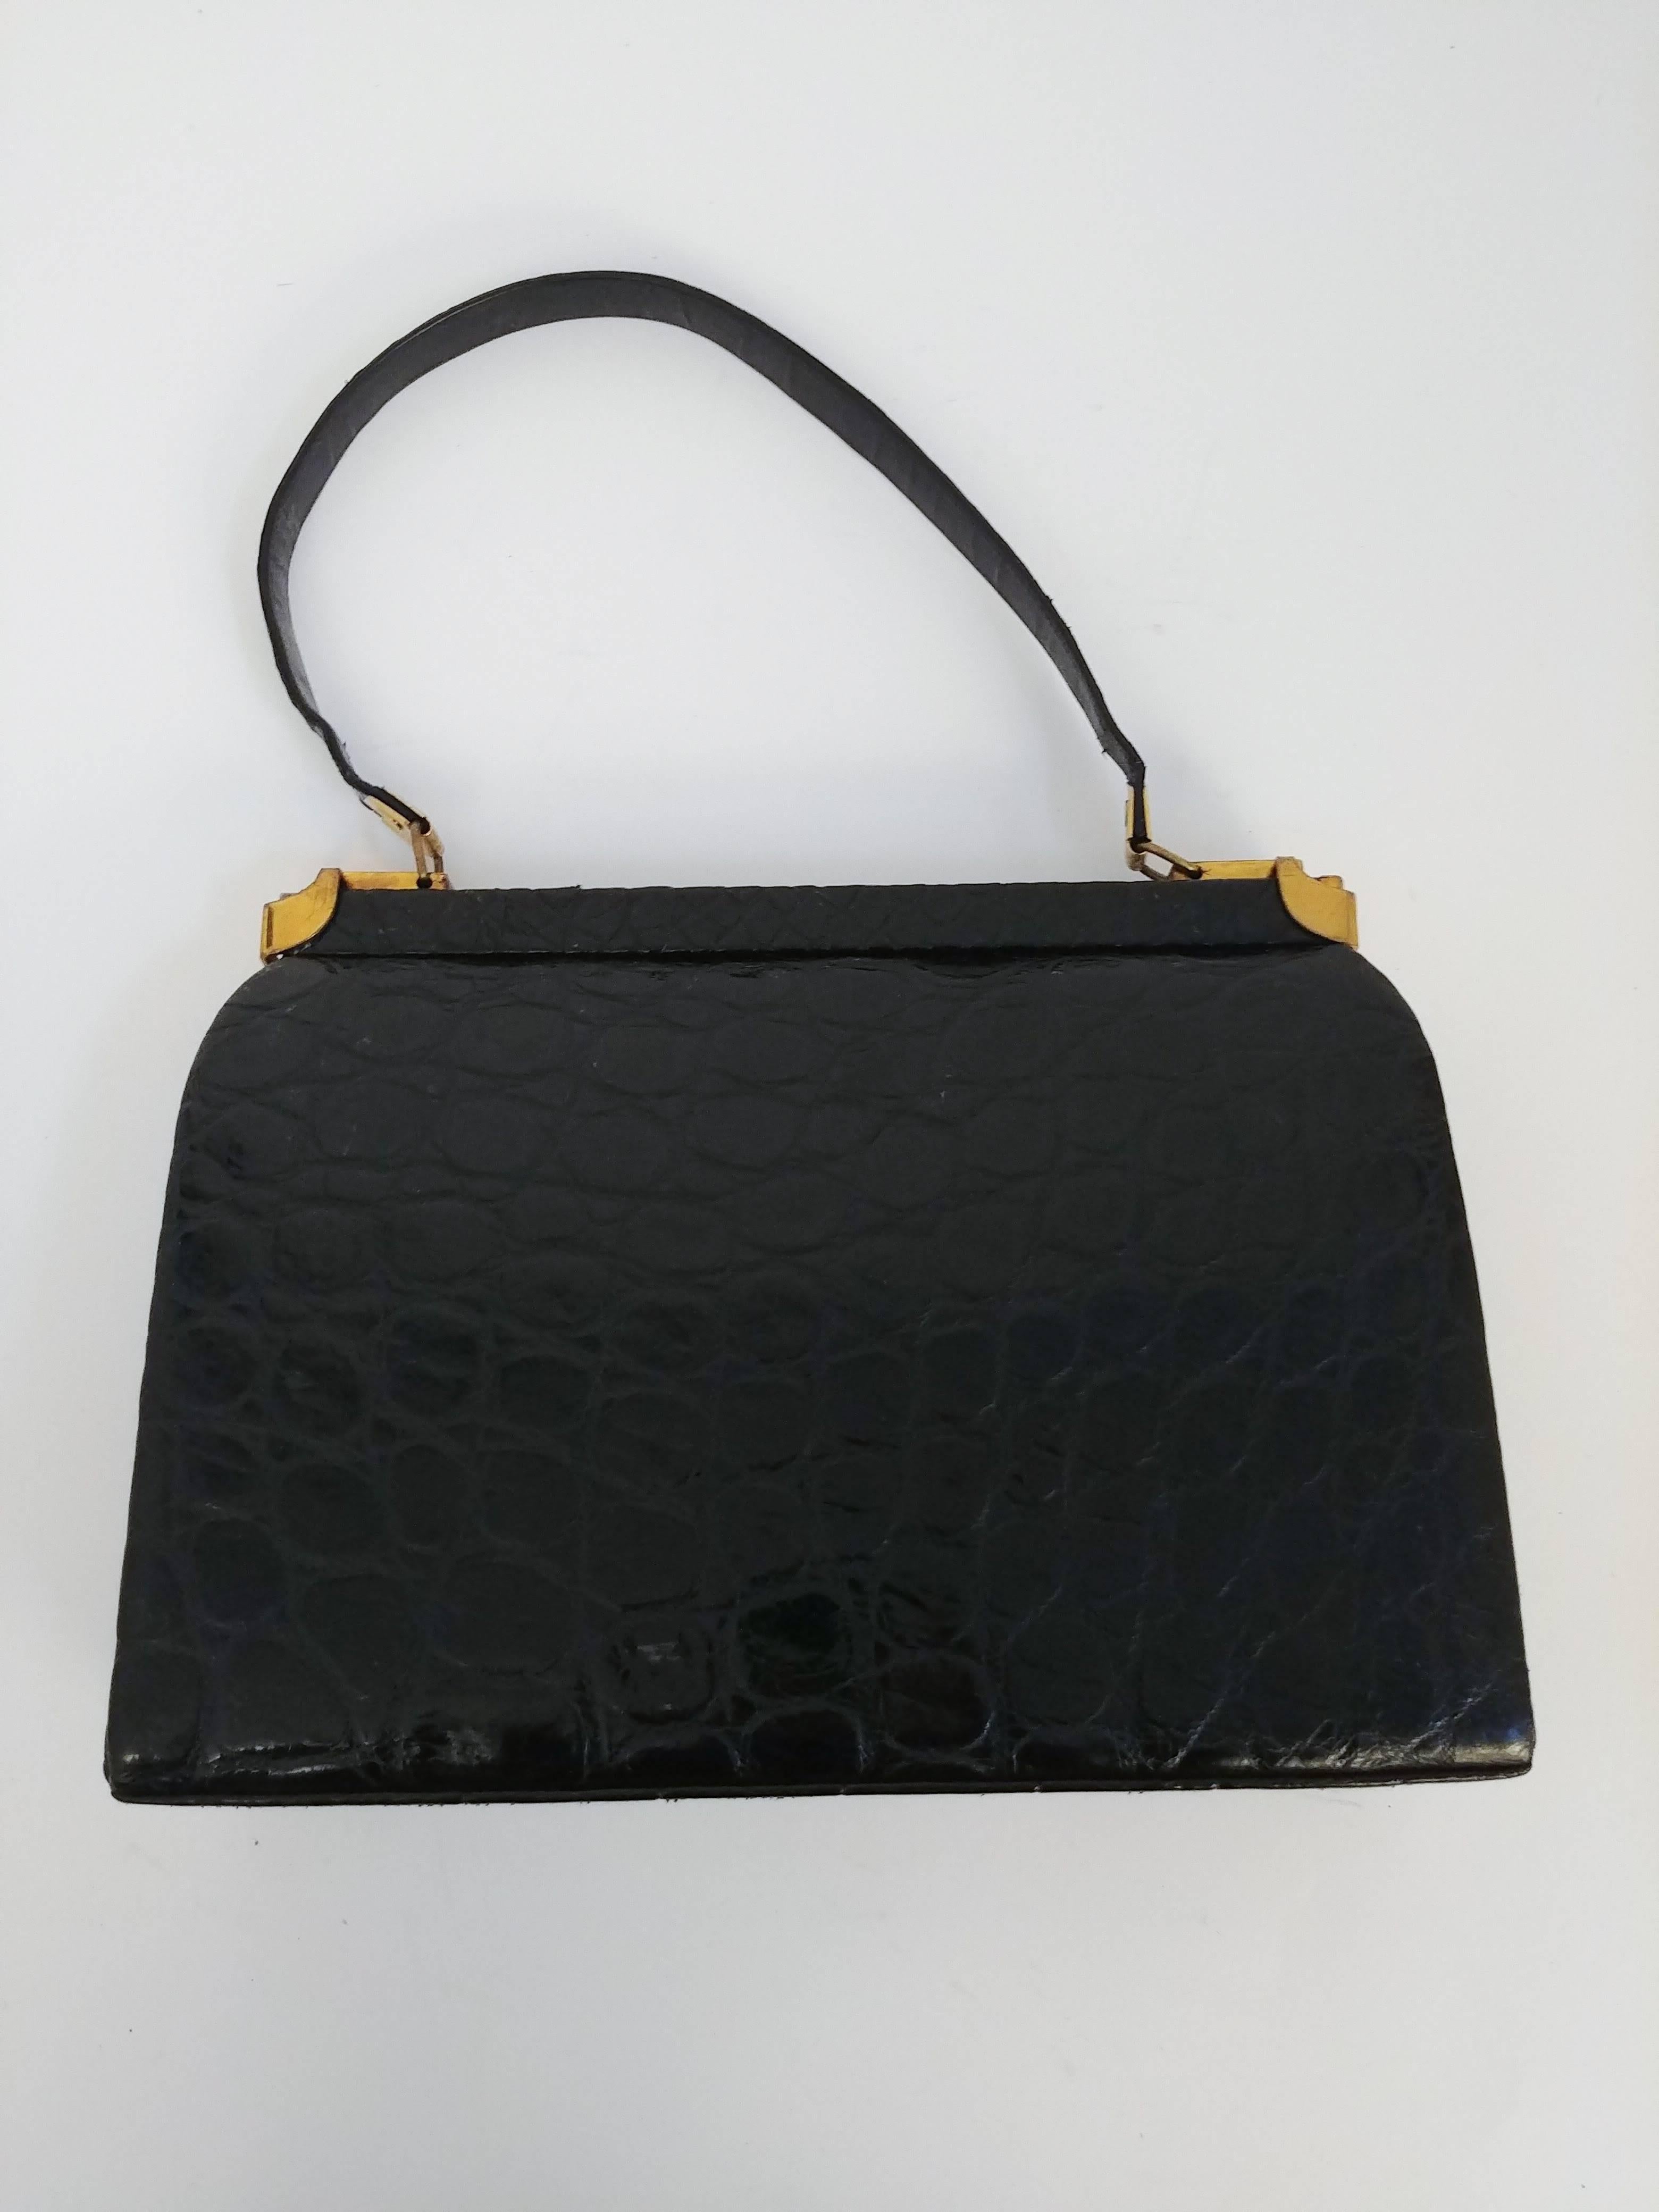 1950s Black Alligator Handbag. Gold hardware closures flip open at sides for extra security. Leather interior. 